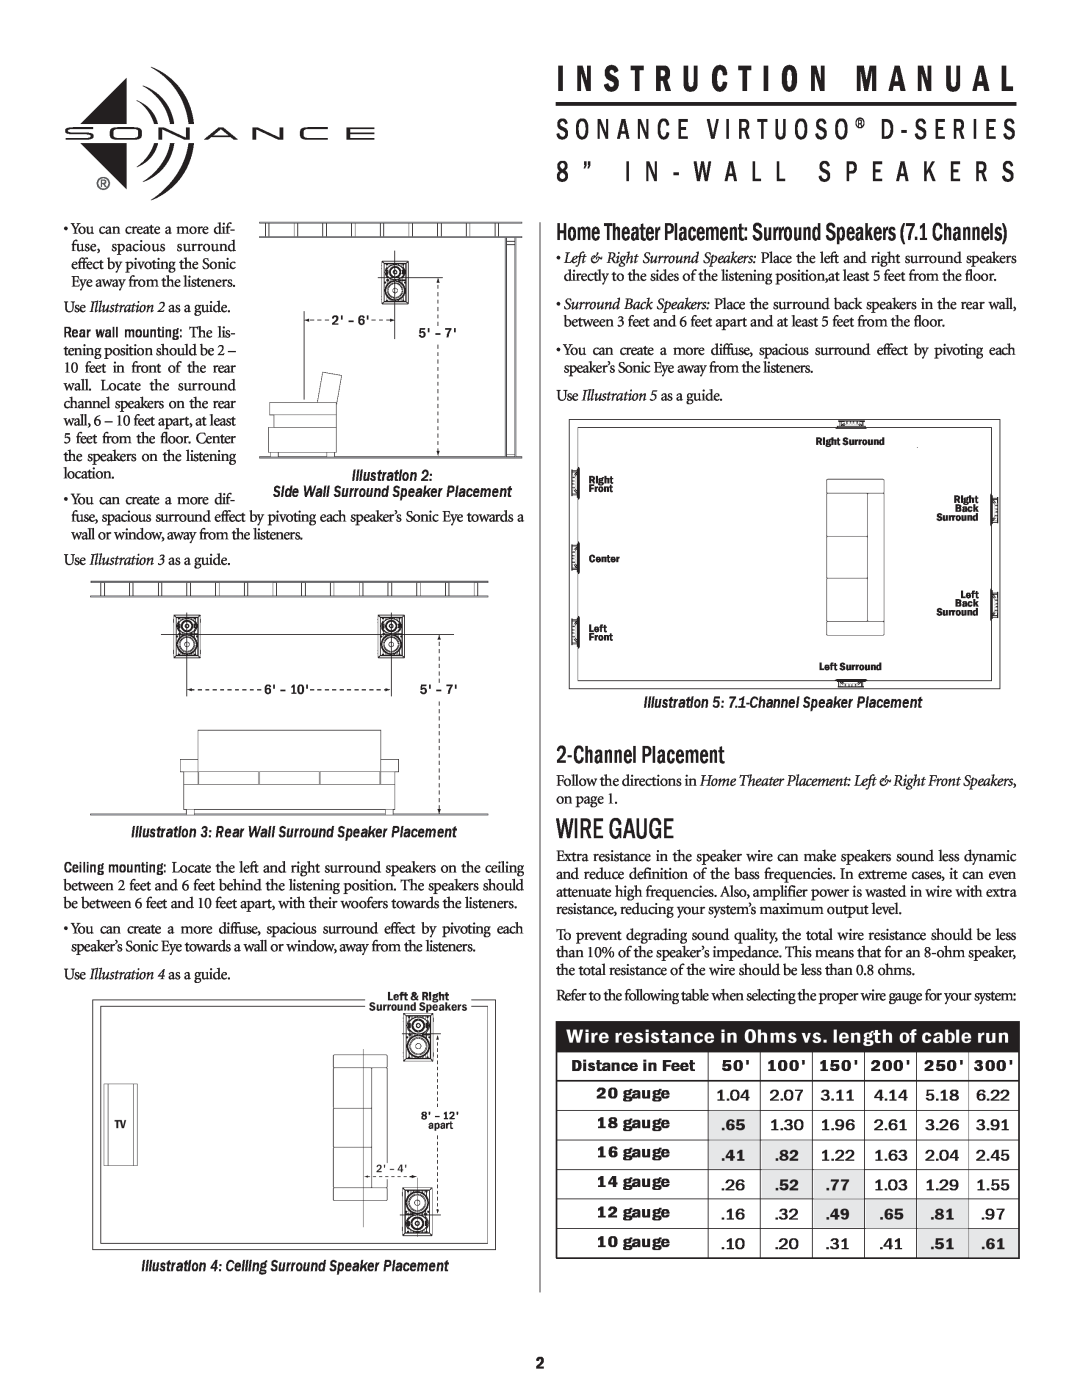 Sonance D-series instruction manual Wire Gauge, ChannelPlacement, Illustration 5 7.1-ChannelSpeaker Placement 